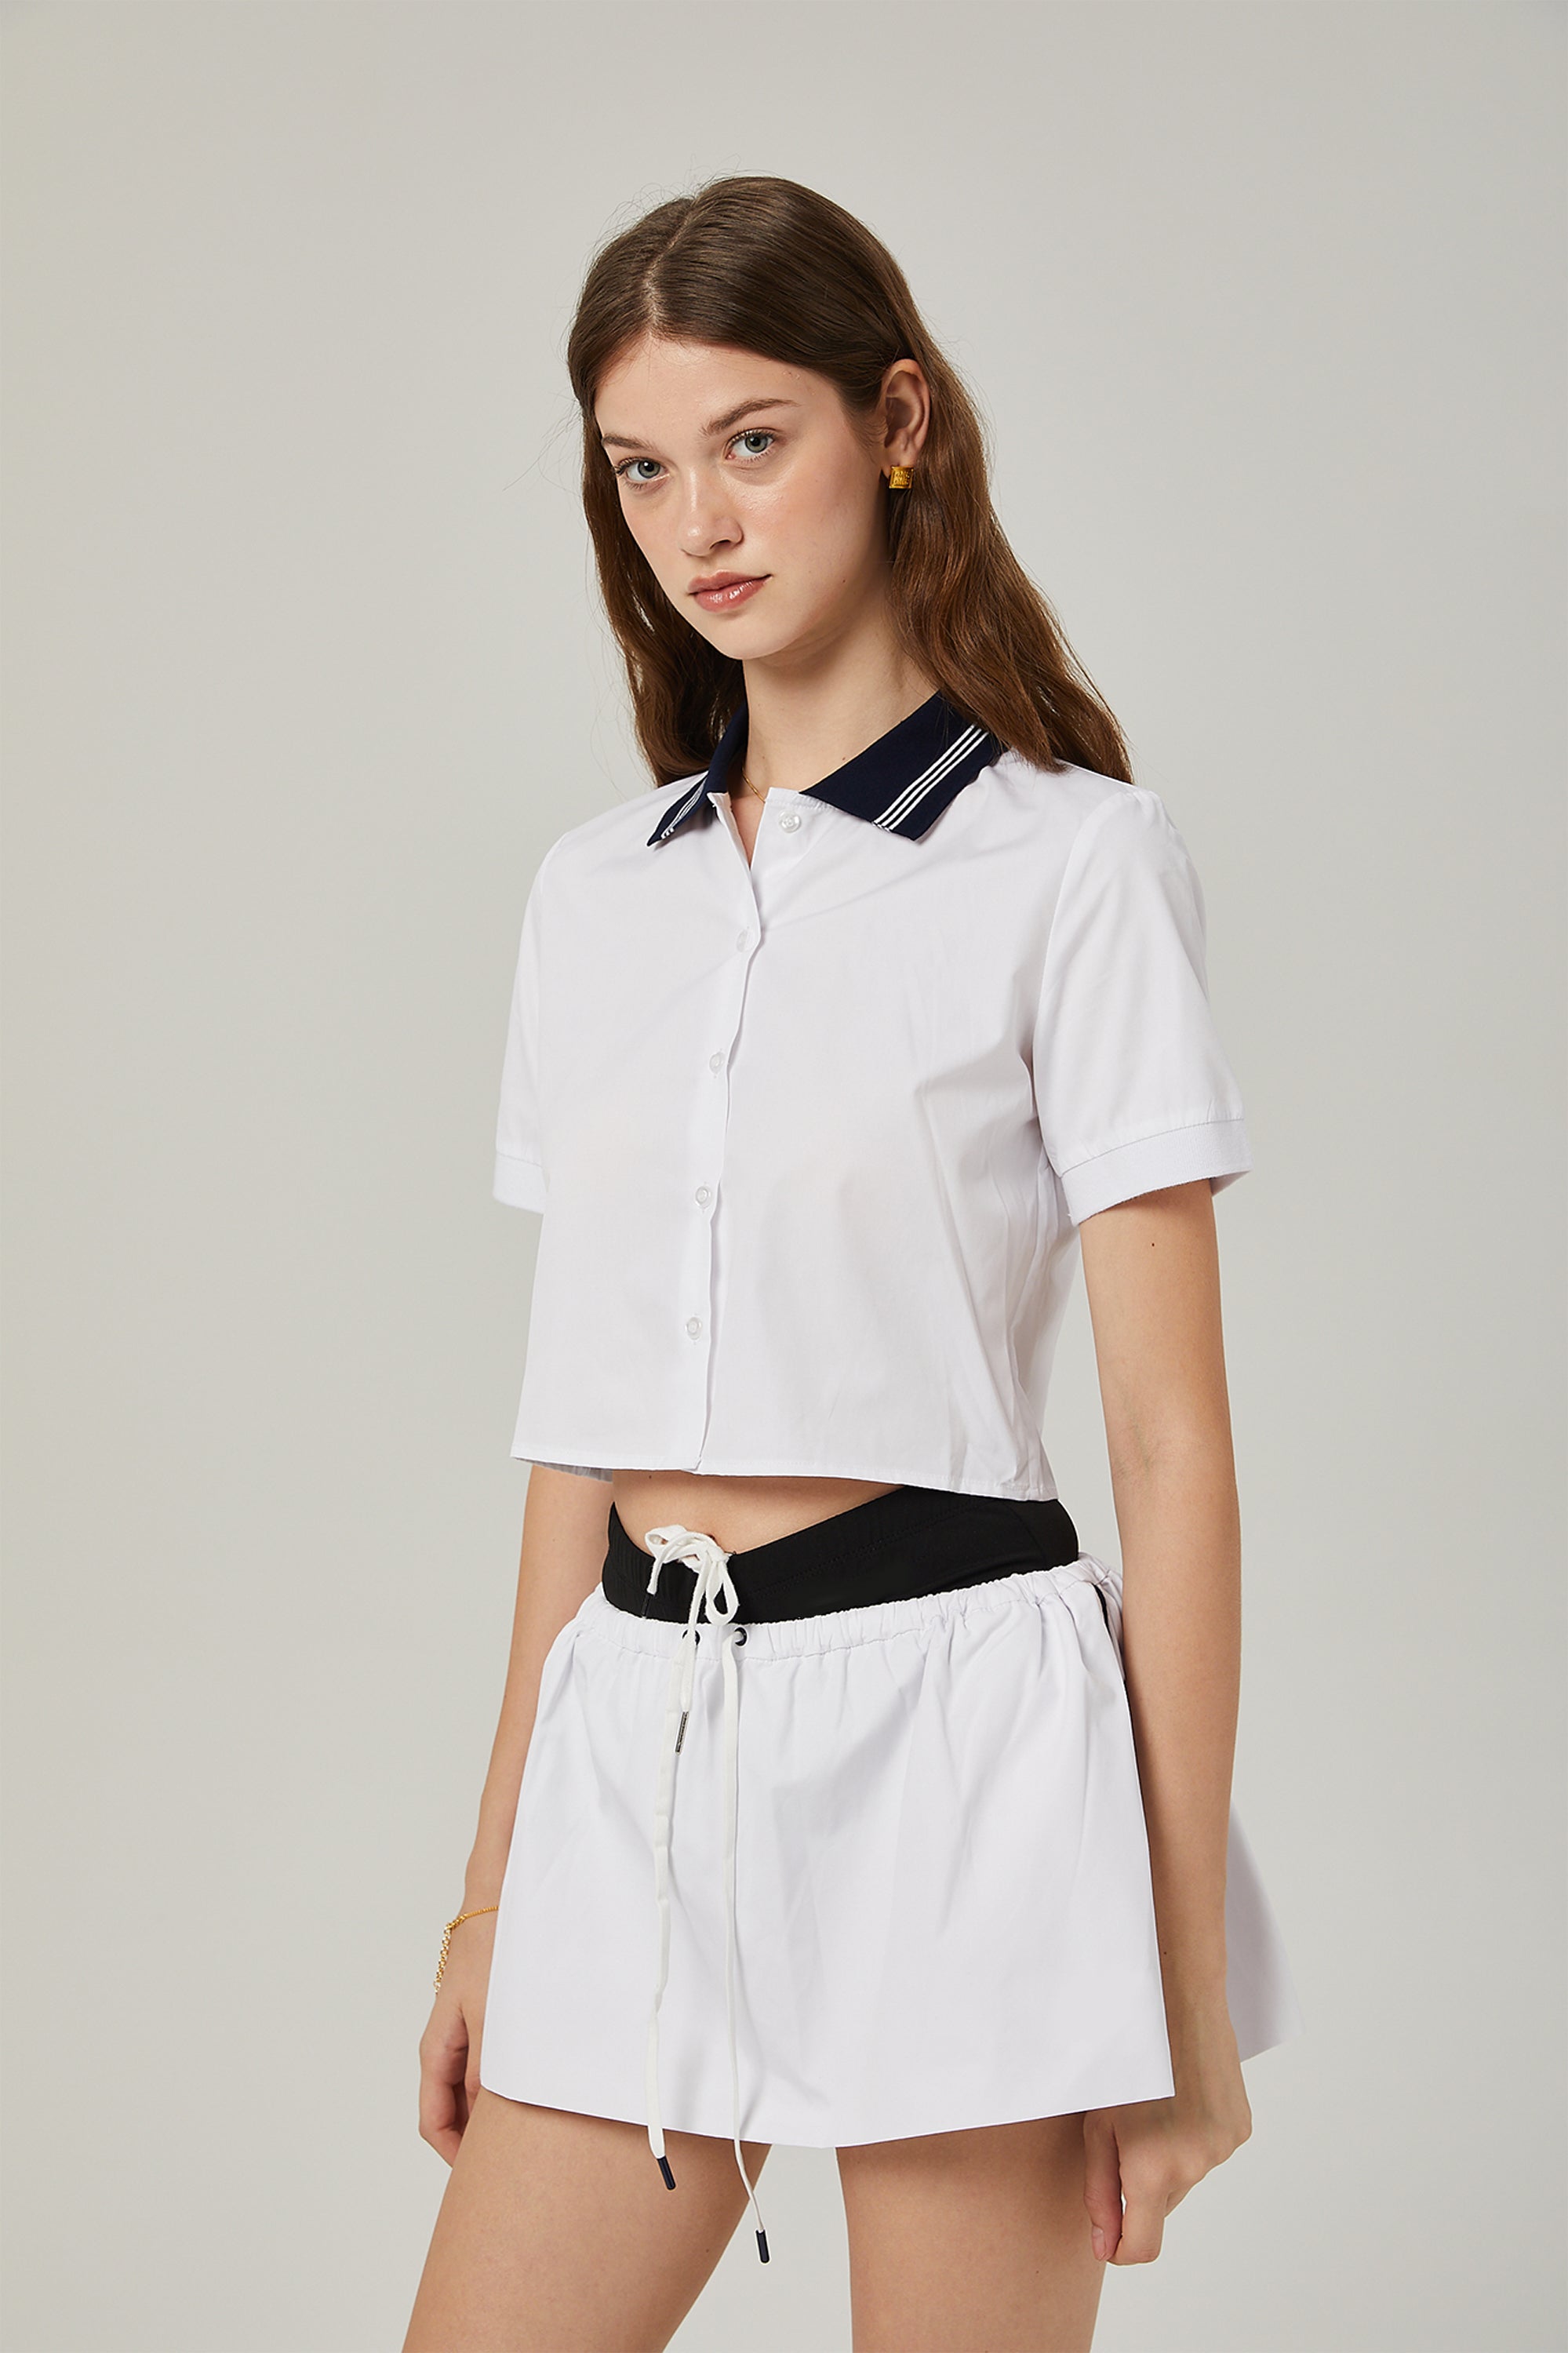 Sandrine color-block shirt & skirt matching set